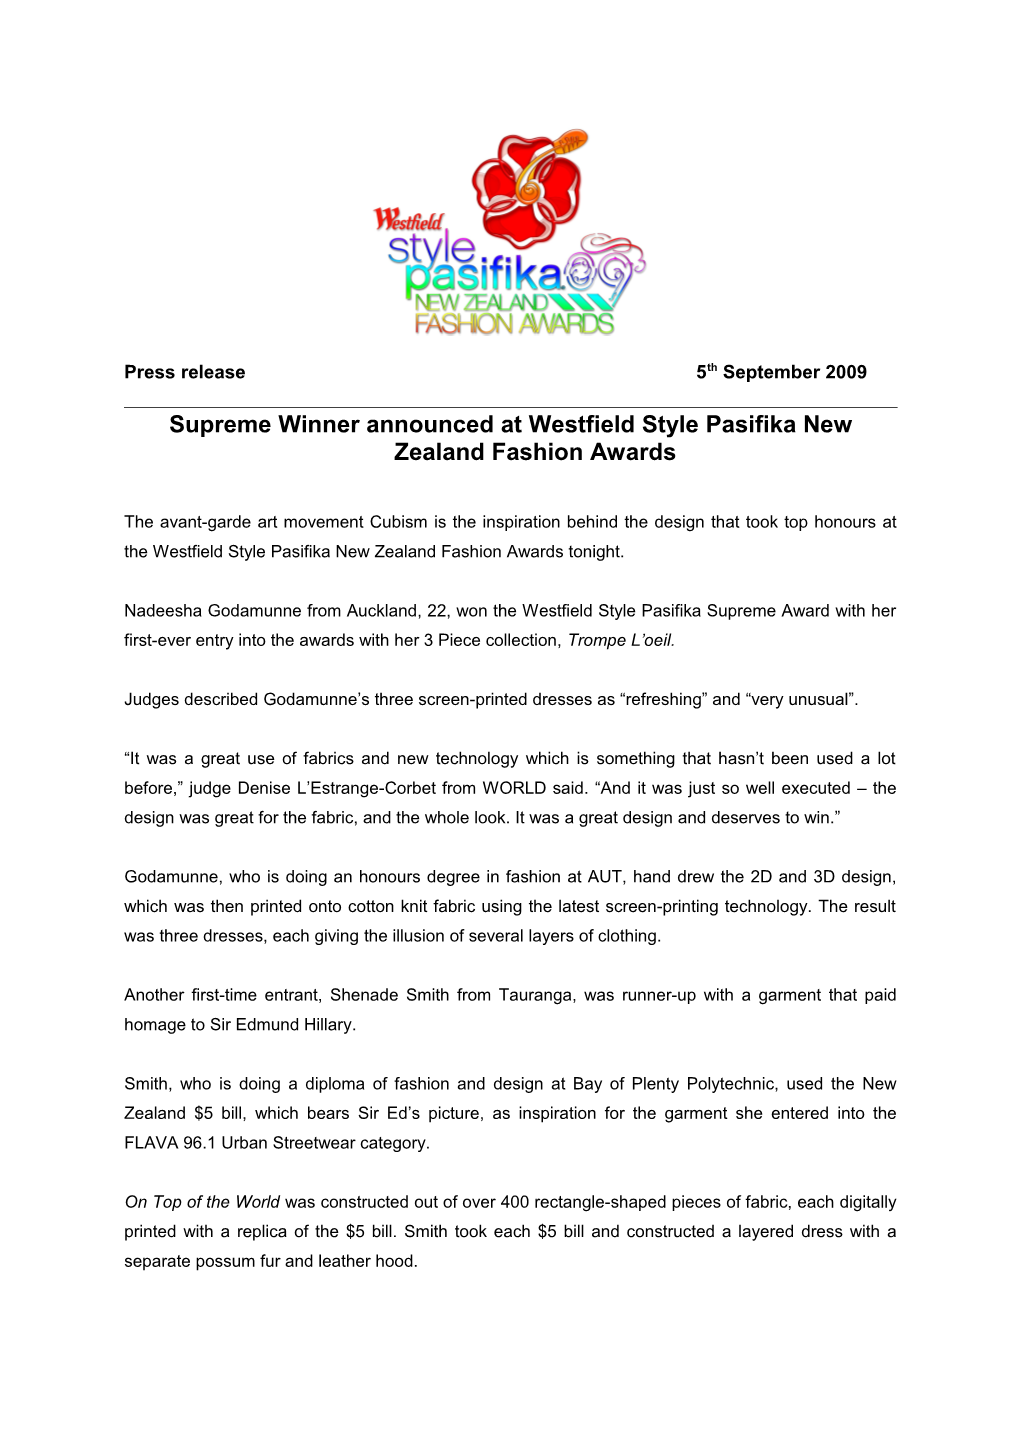 Supreme Winner Announced at Westfield Style Pasifika New Zealand Fashion Awards